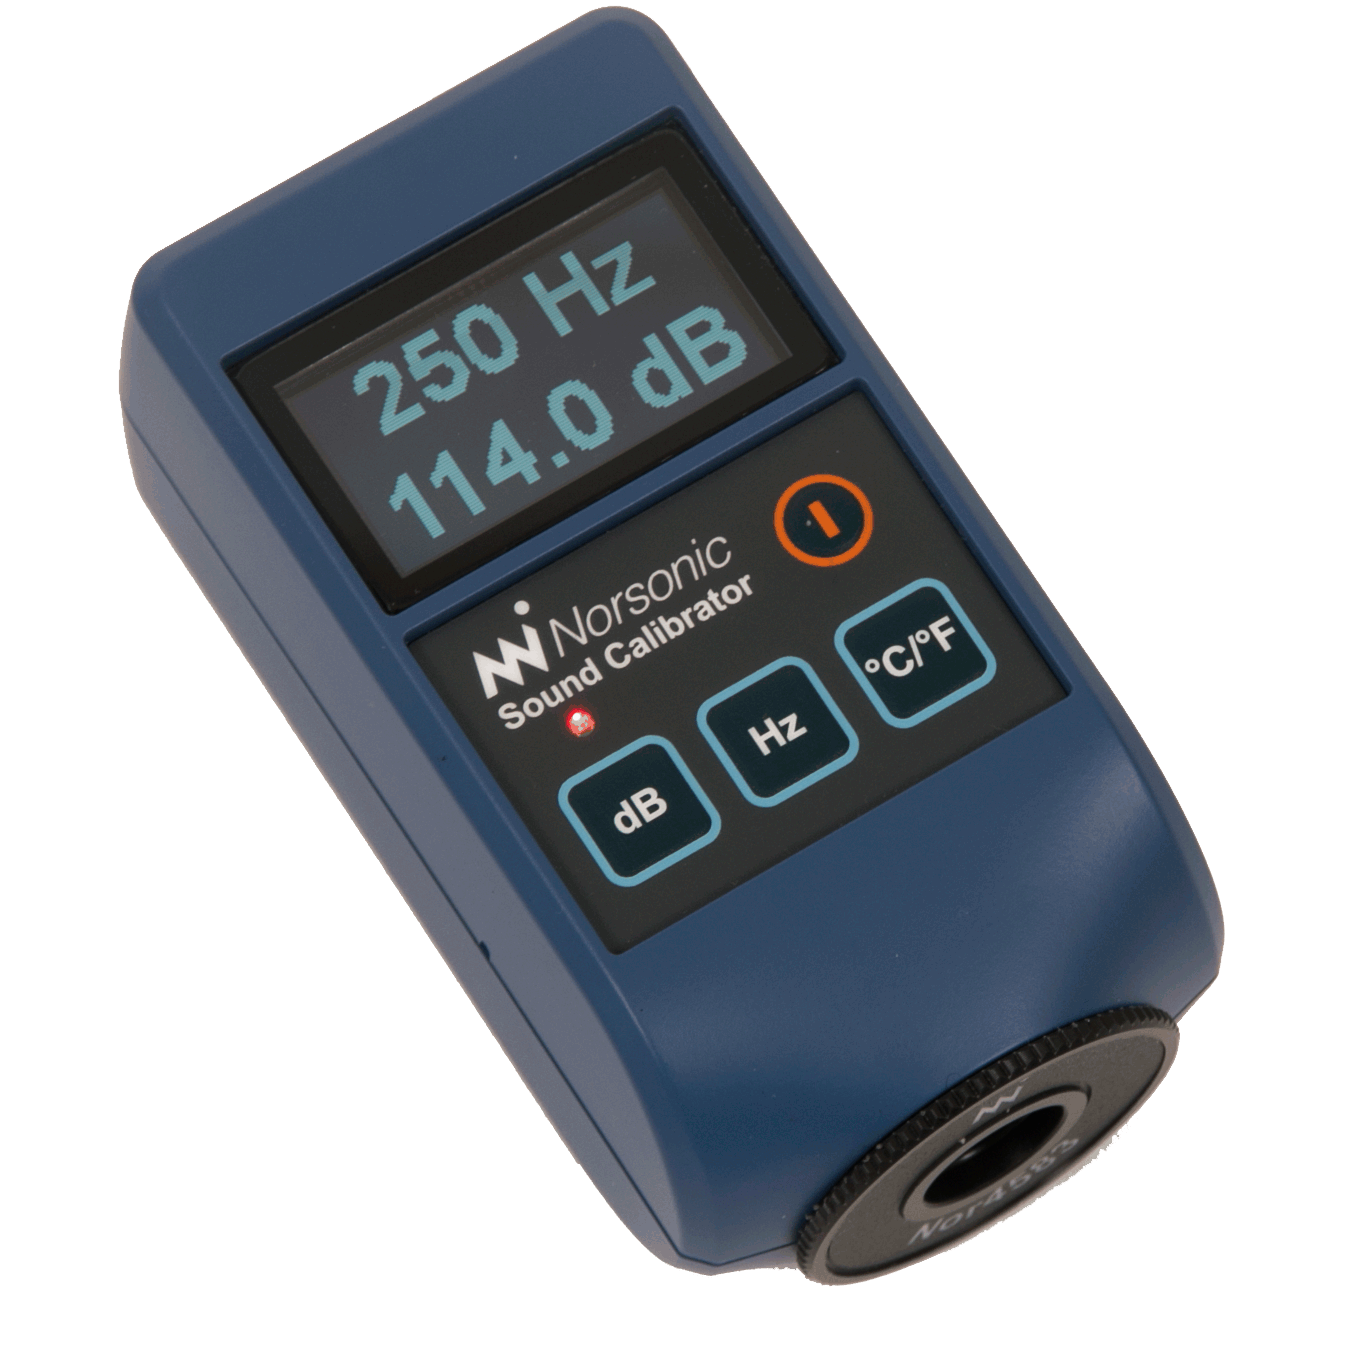 Nor1256 sound calibrator